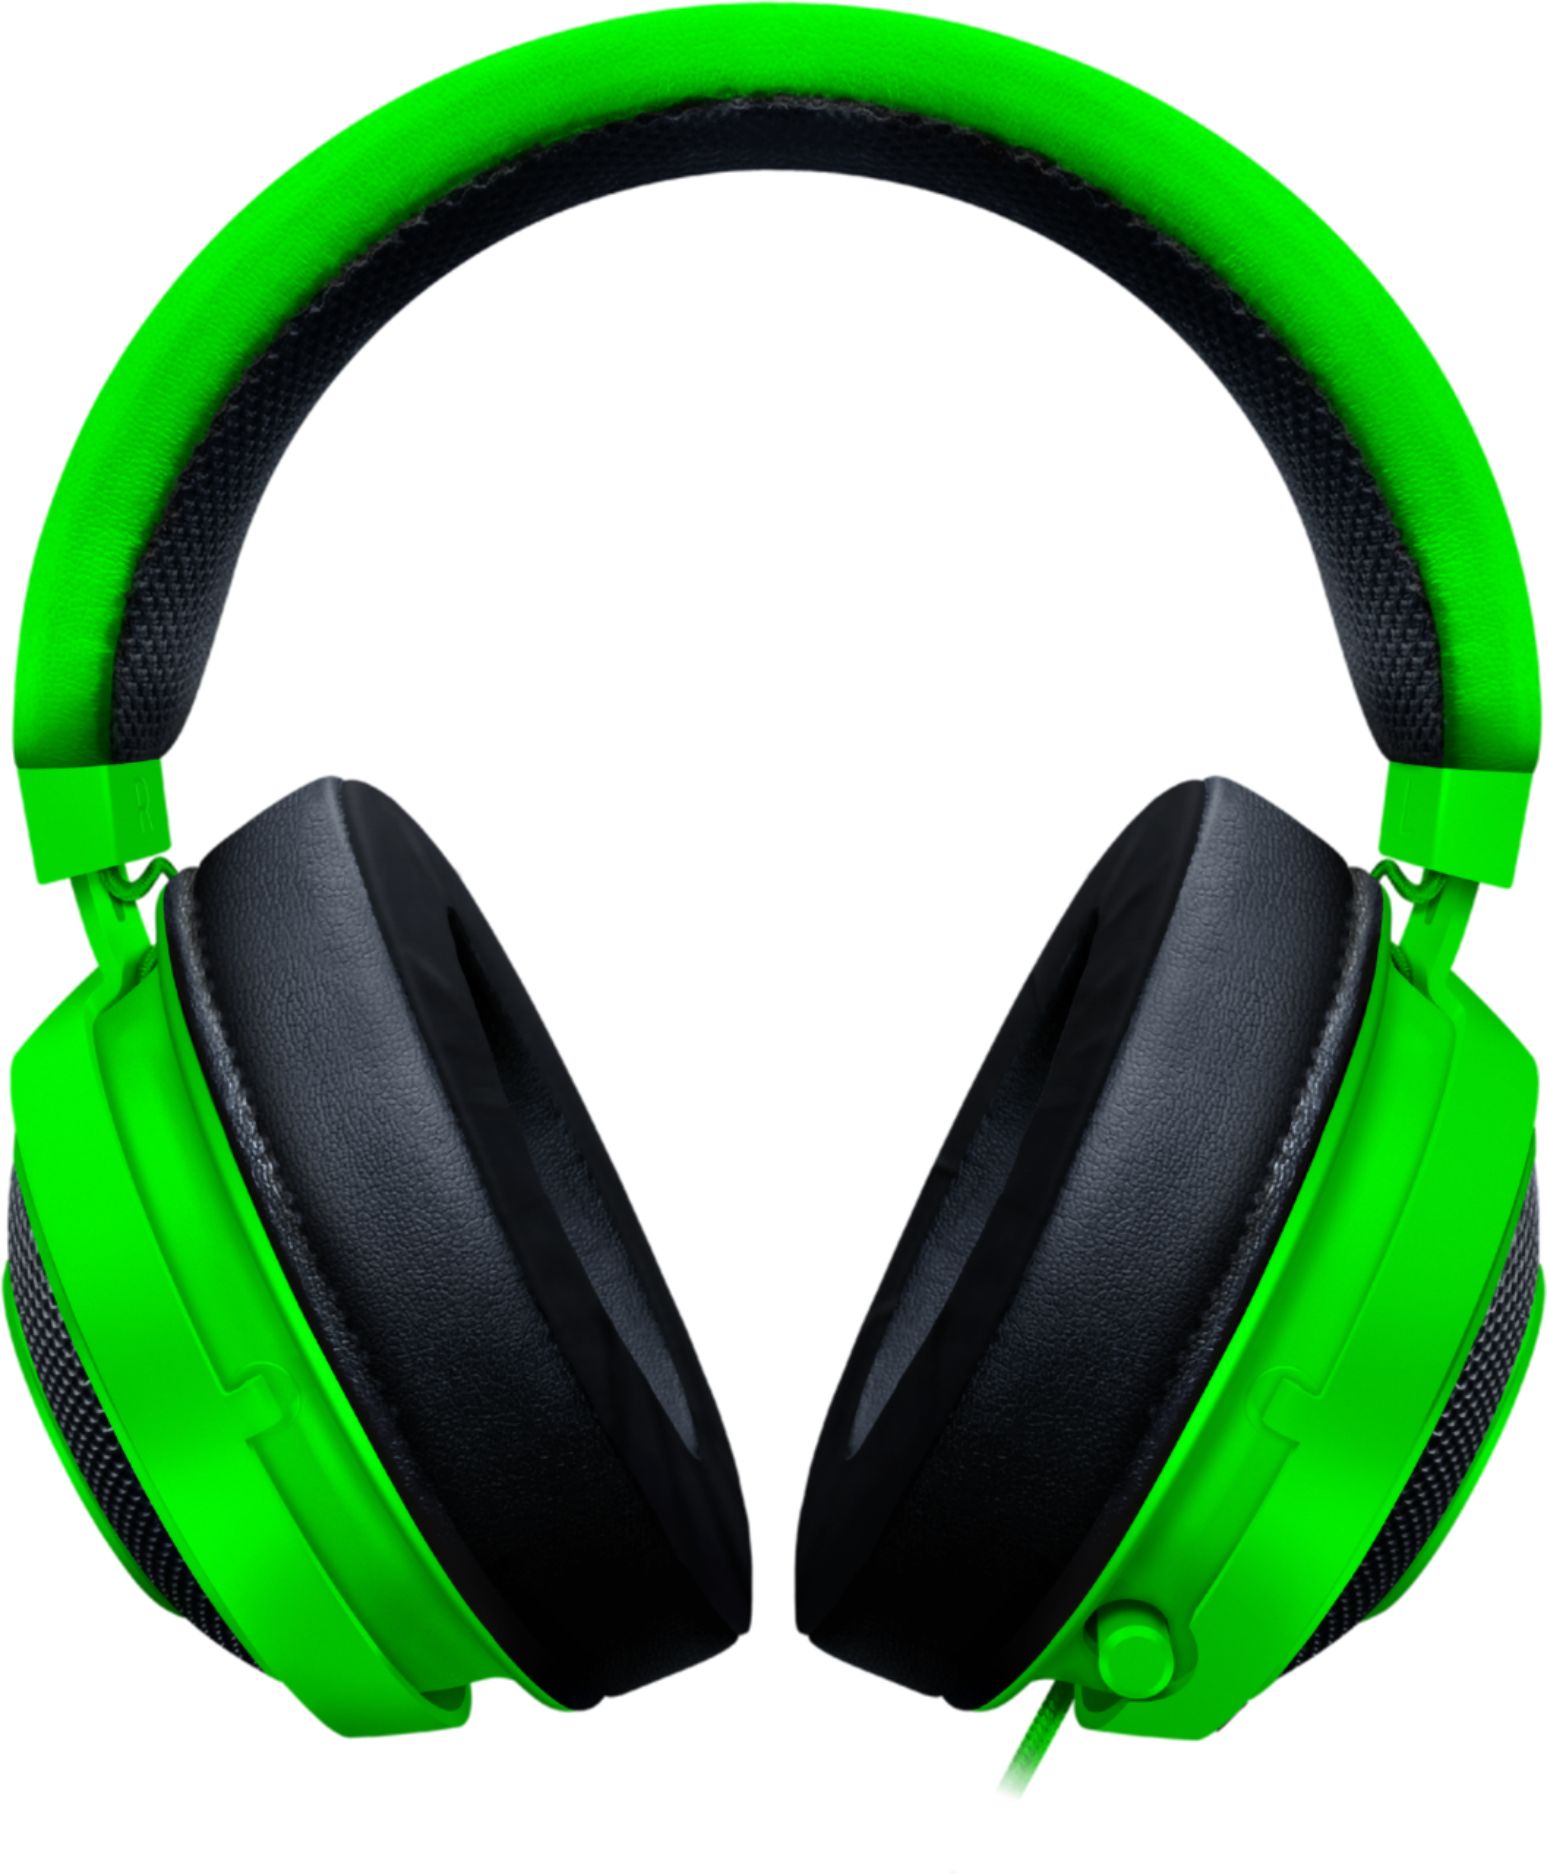 Razer Kraken Wired 7 1 Surround Sound Gaming Headset For Pc Ps4 Ps5 Switch Xbox One Series X S Green Rz04 00 R3u1 Best Buy